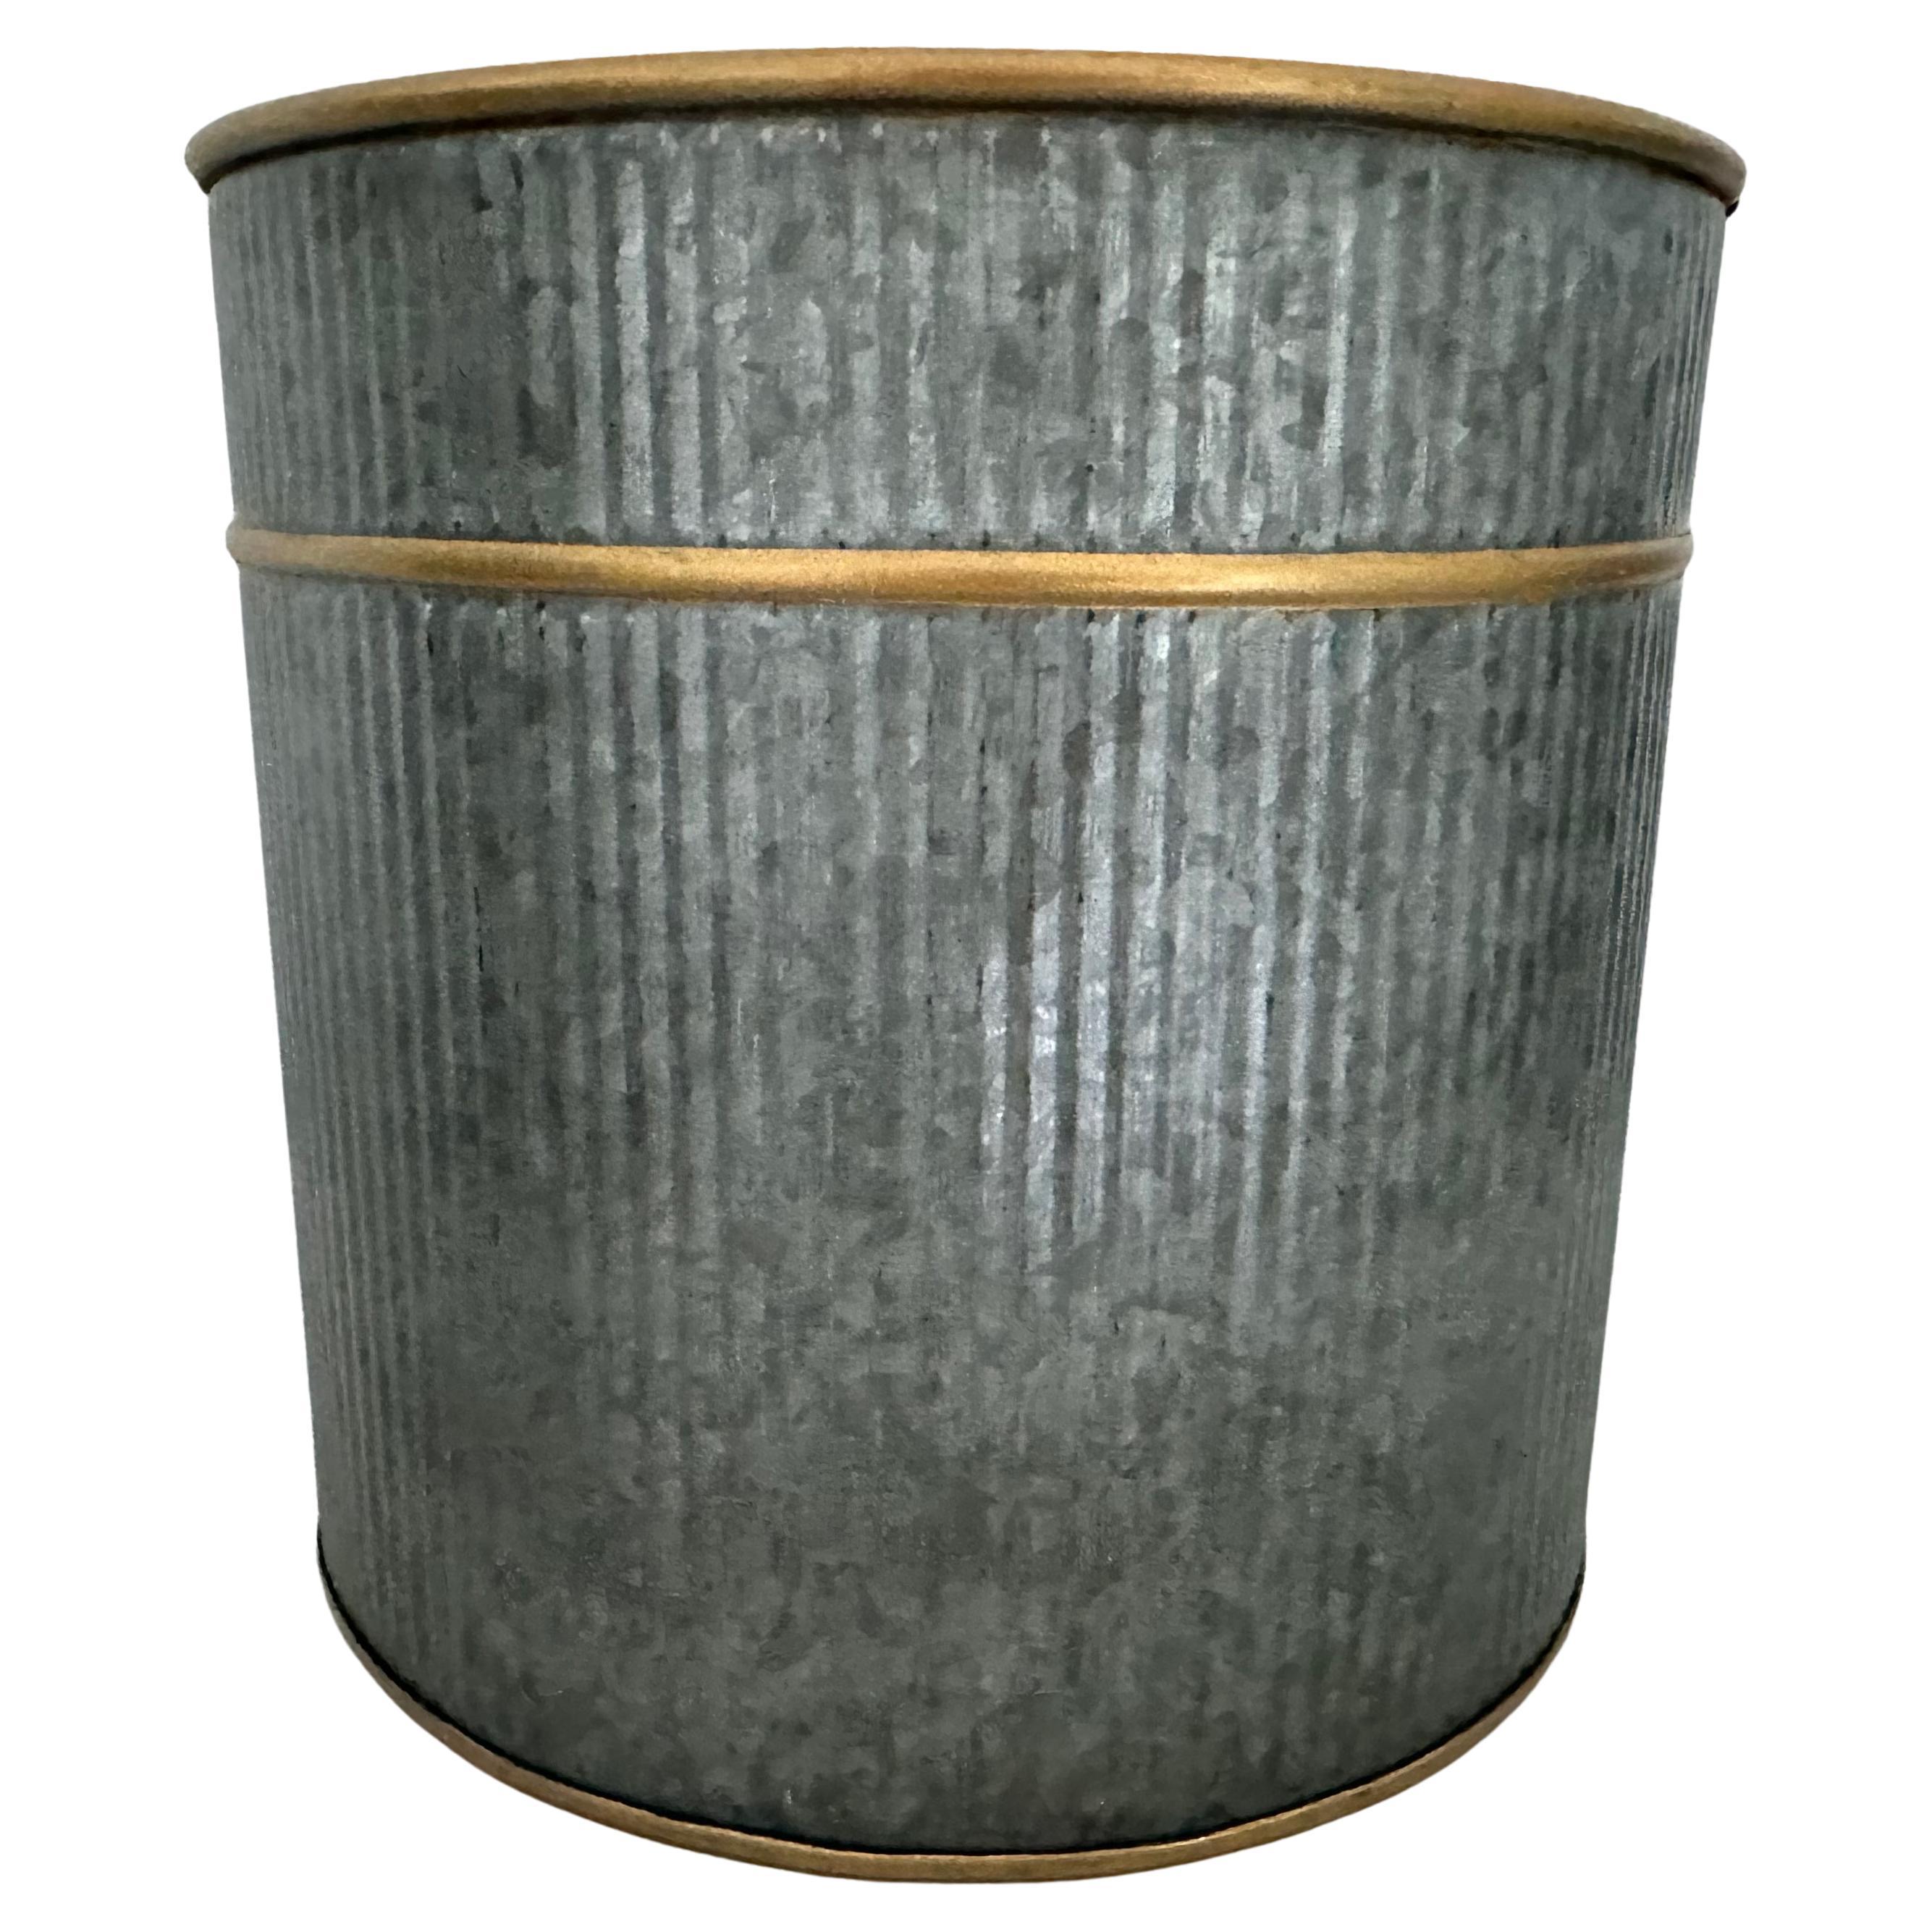 Neoklassizistischer vergoldeter Metall-Wasserkorb mit vergoldetem Akzent